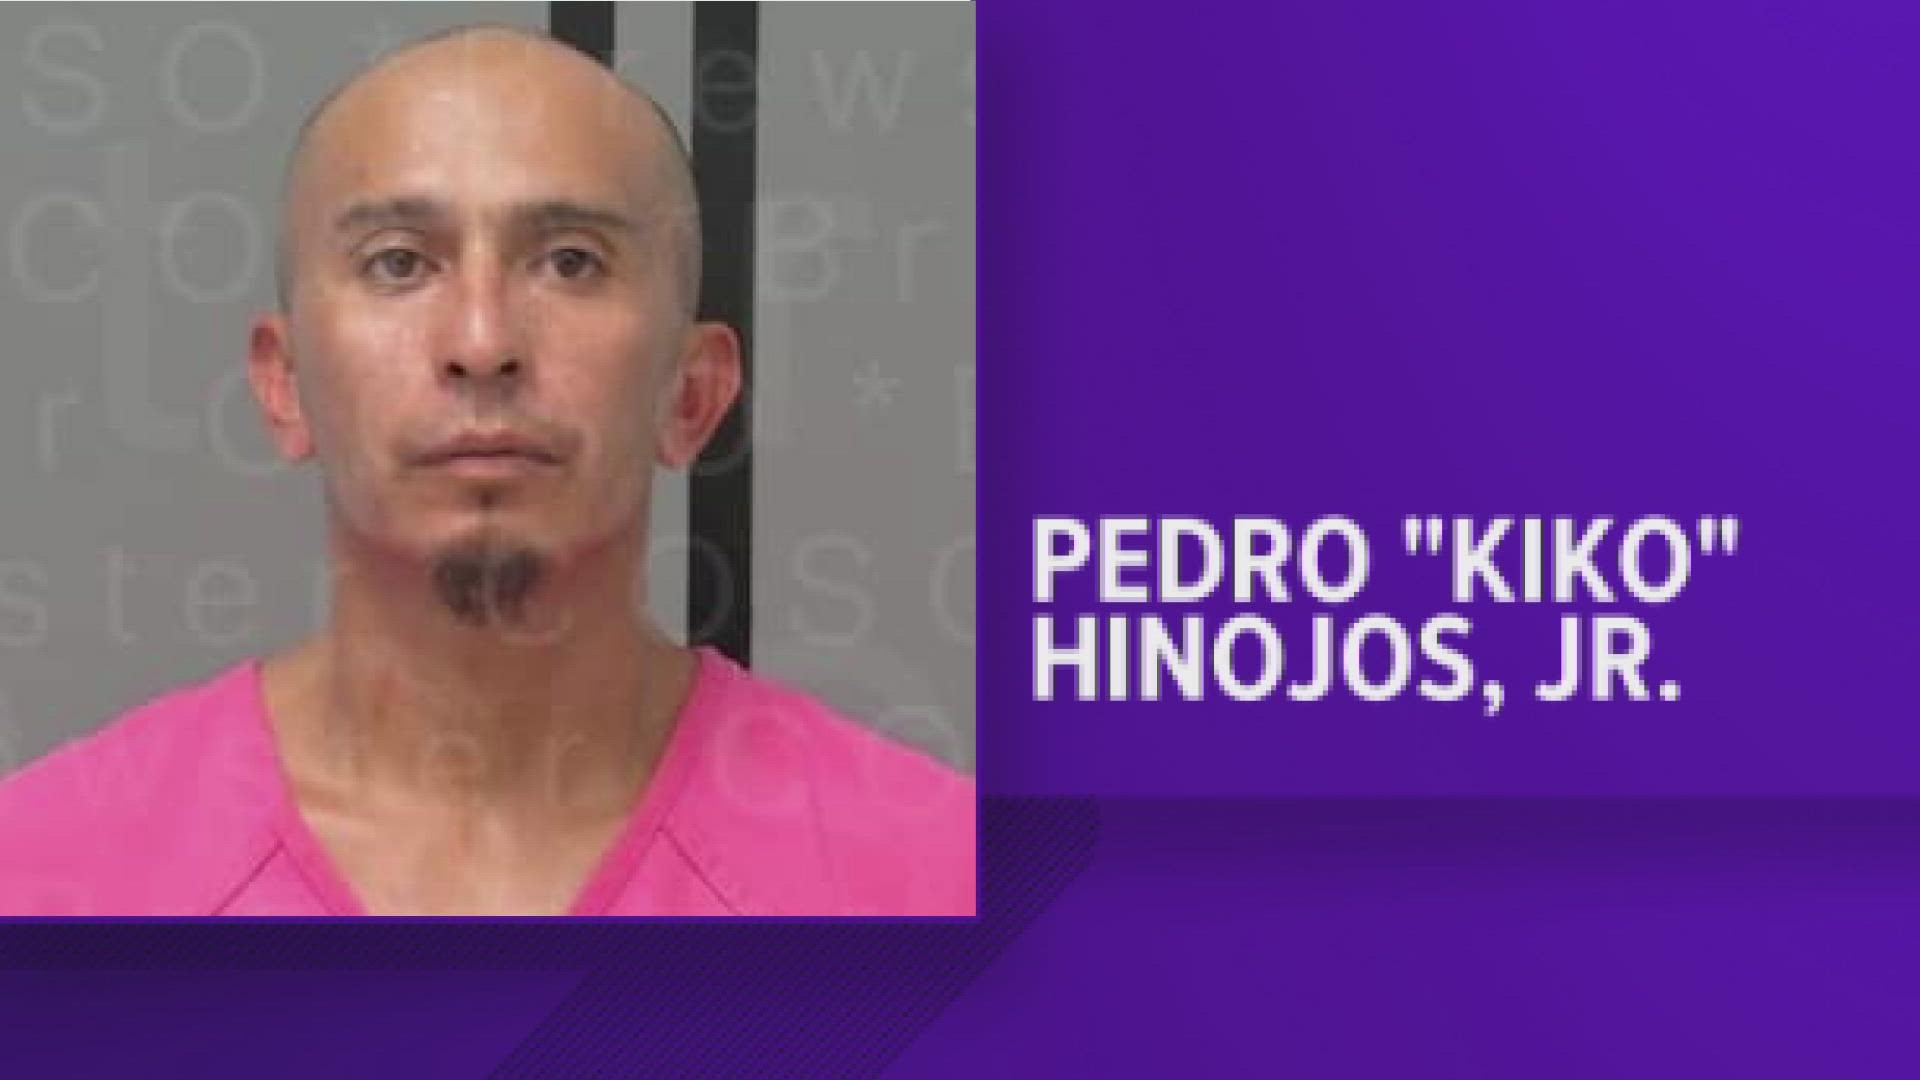 Pedro "Kiko" Hinojos, Jr. is wanted for enticing a child and harboring a runaway.